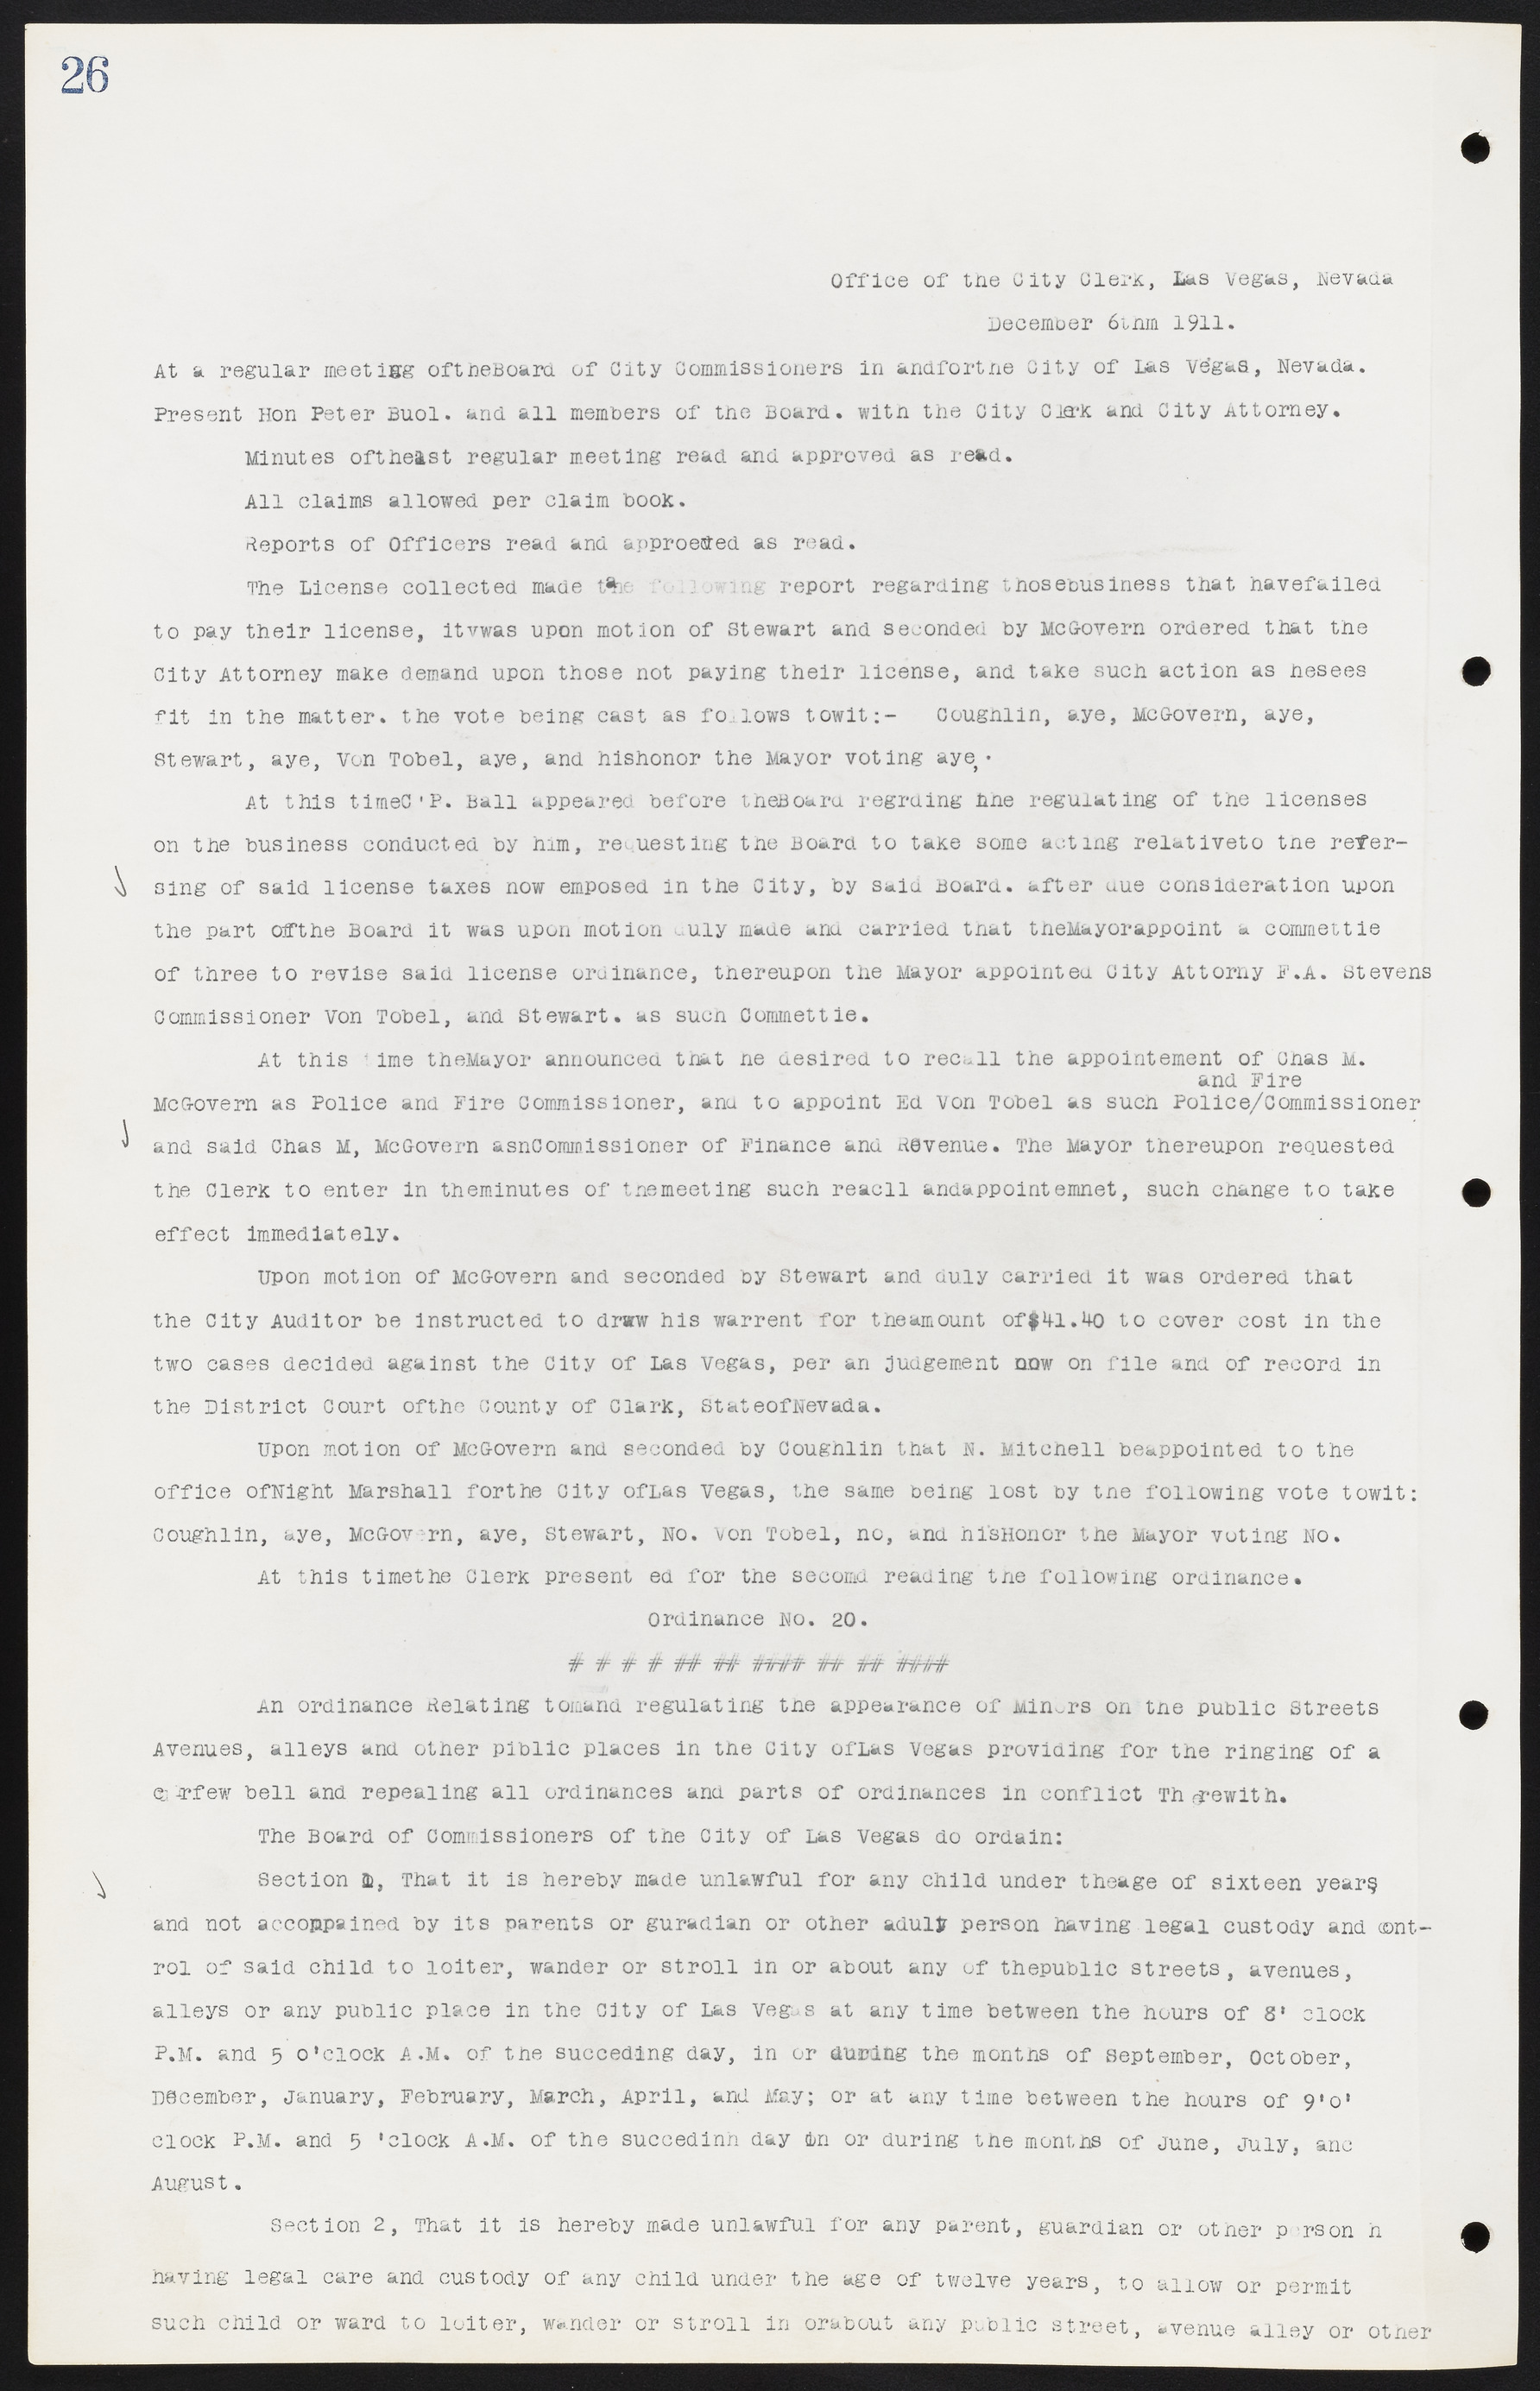 Las Vegas City Commission Minutes, June 22, 1911 to February 7, 1922, lvc000001-40